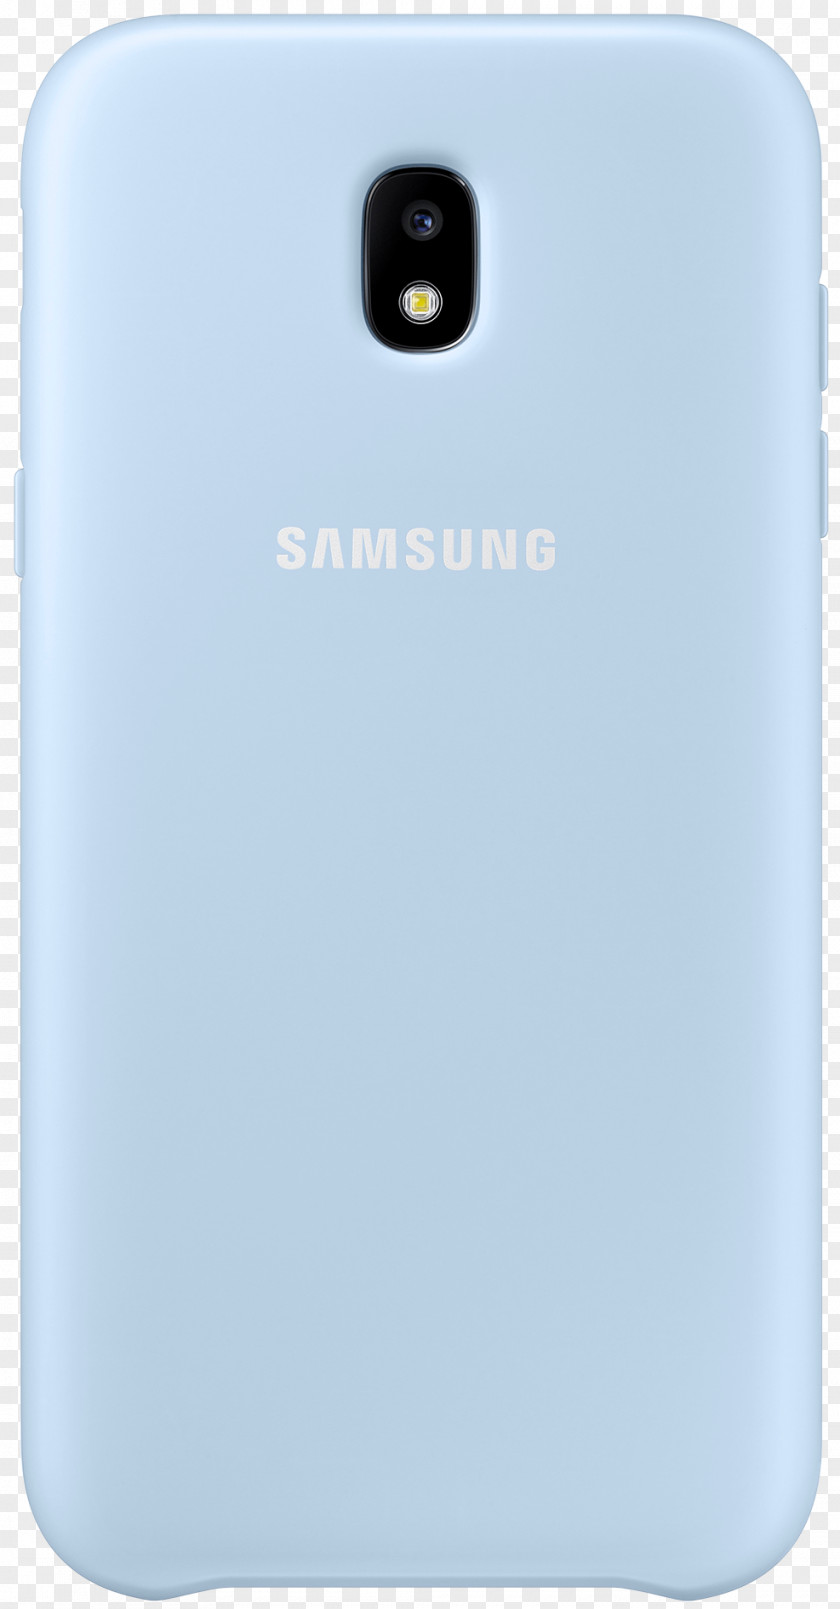 Smartphone Samsung Galaxy J7 J5 Vodafone PNG